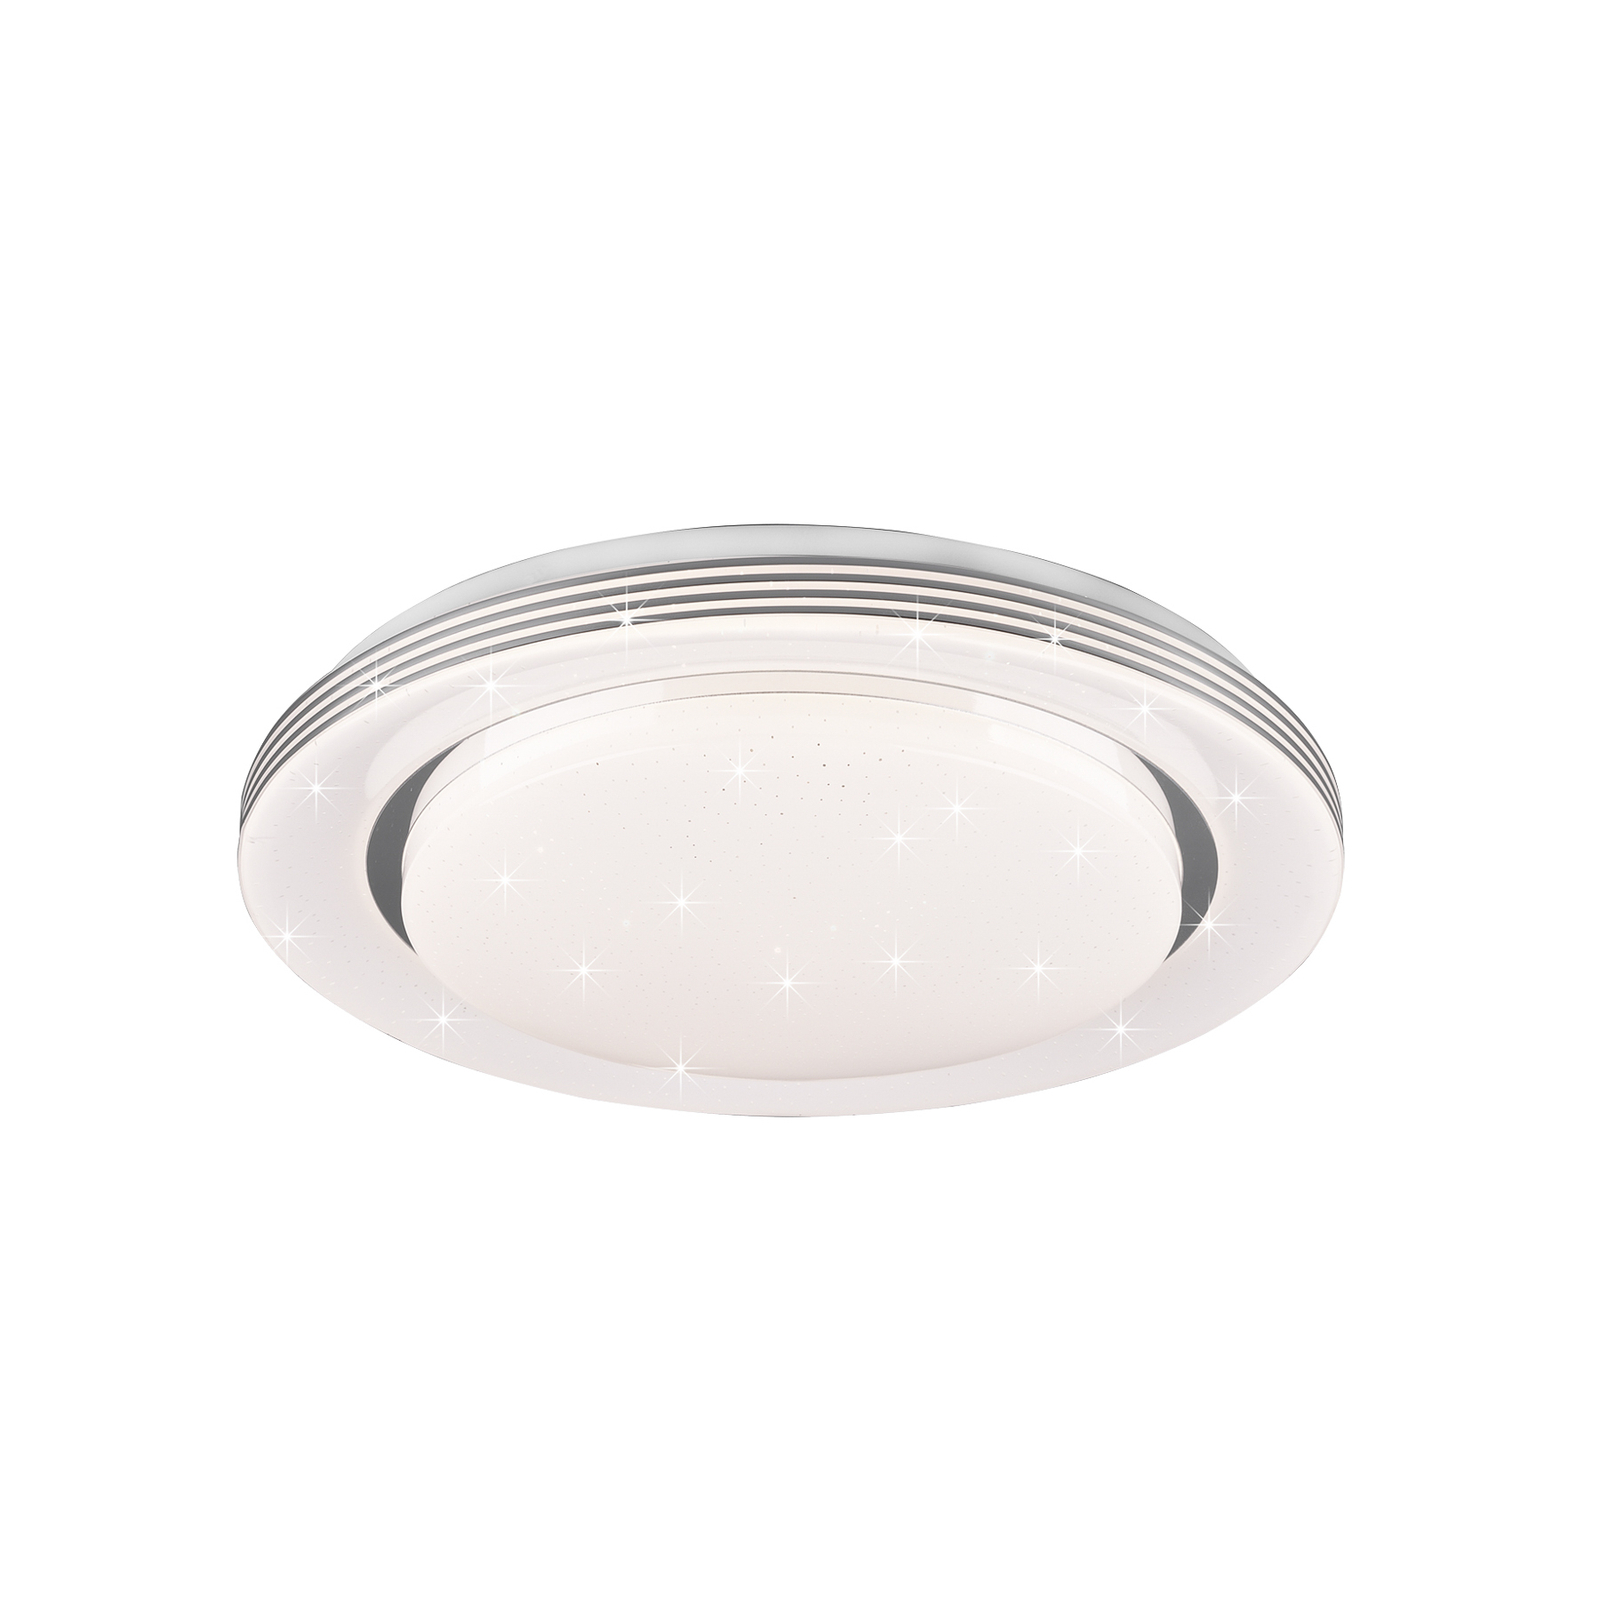 LED stropné svietidlo Atria, Ø 38 cm, biele, plast, CCT